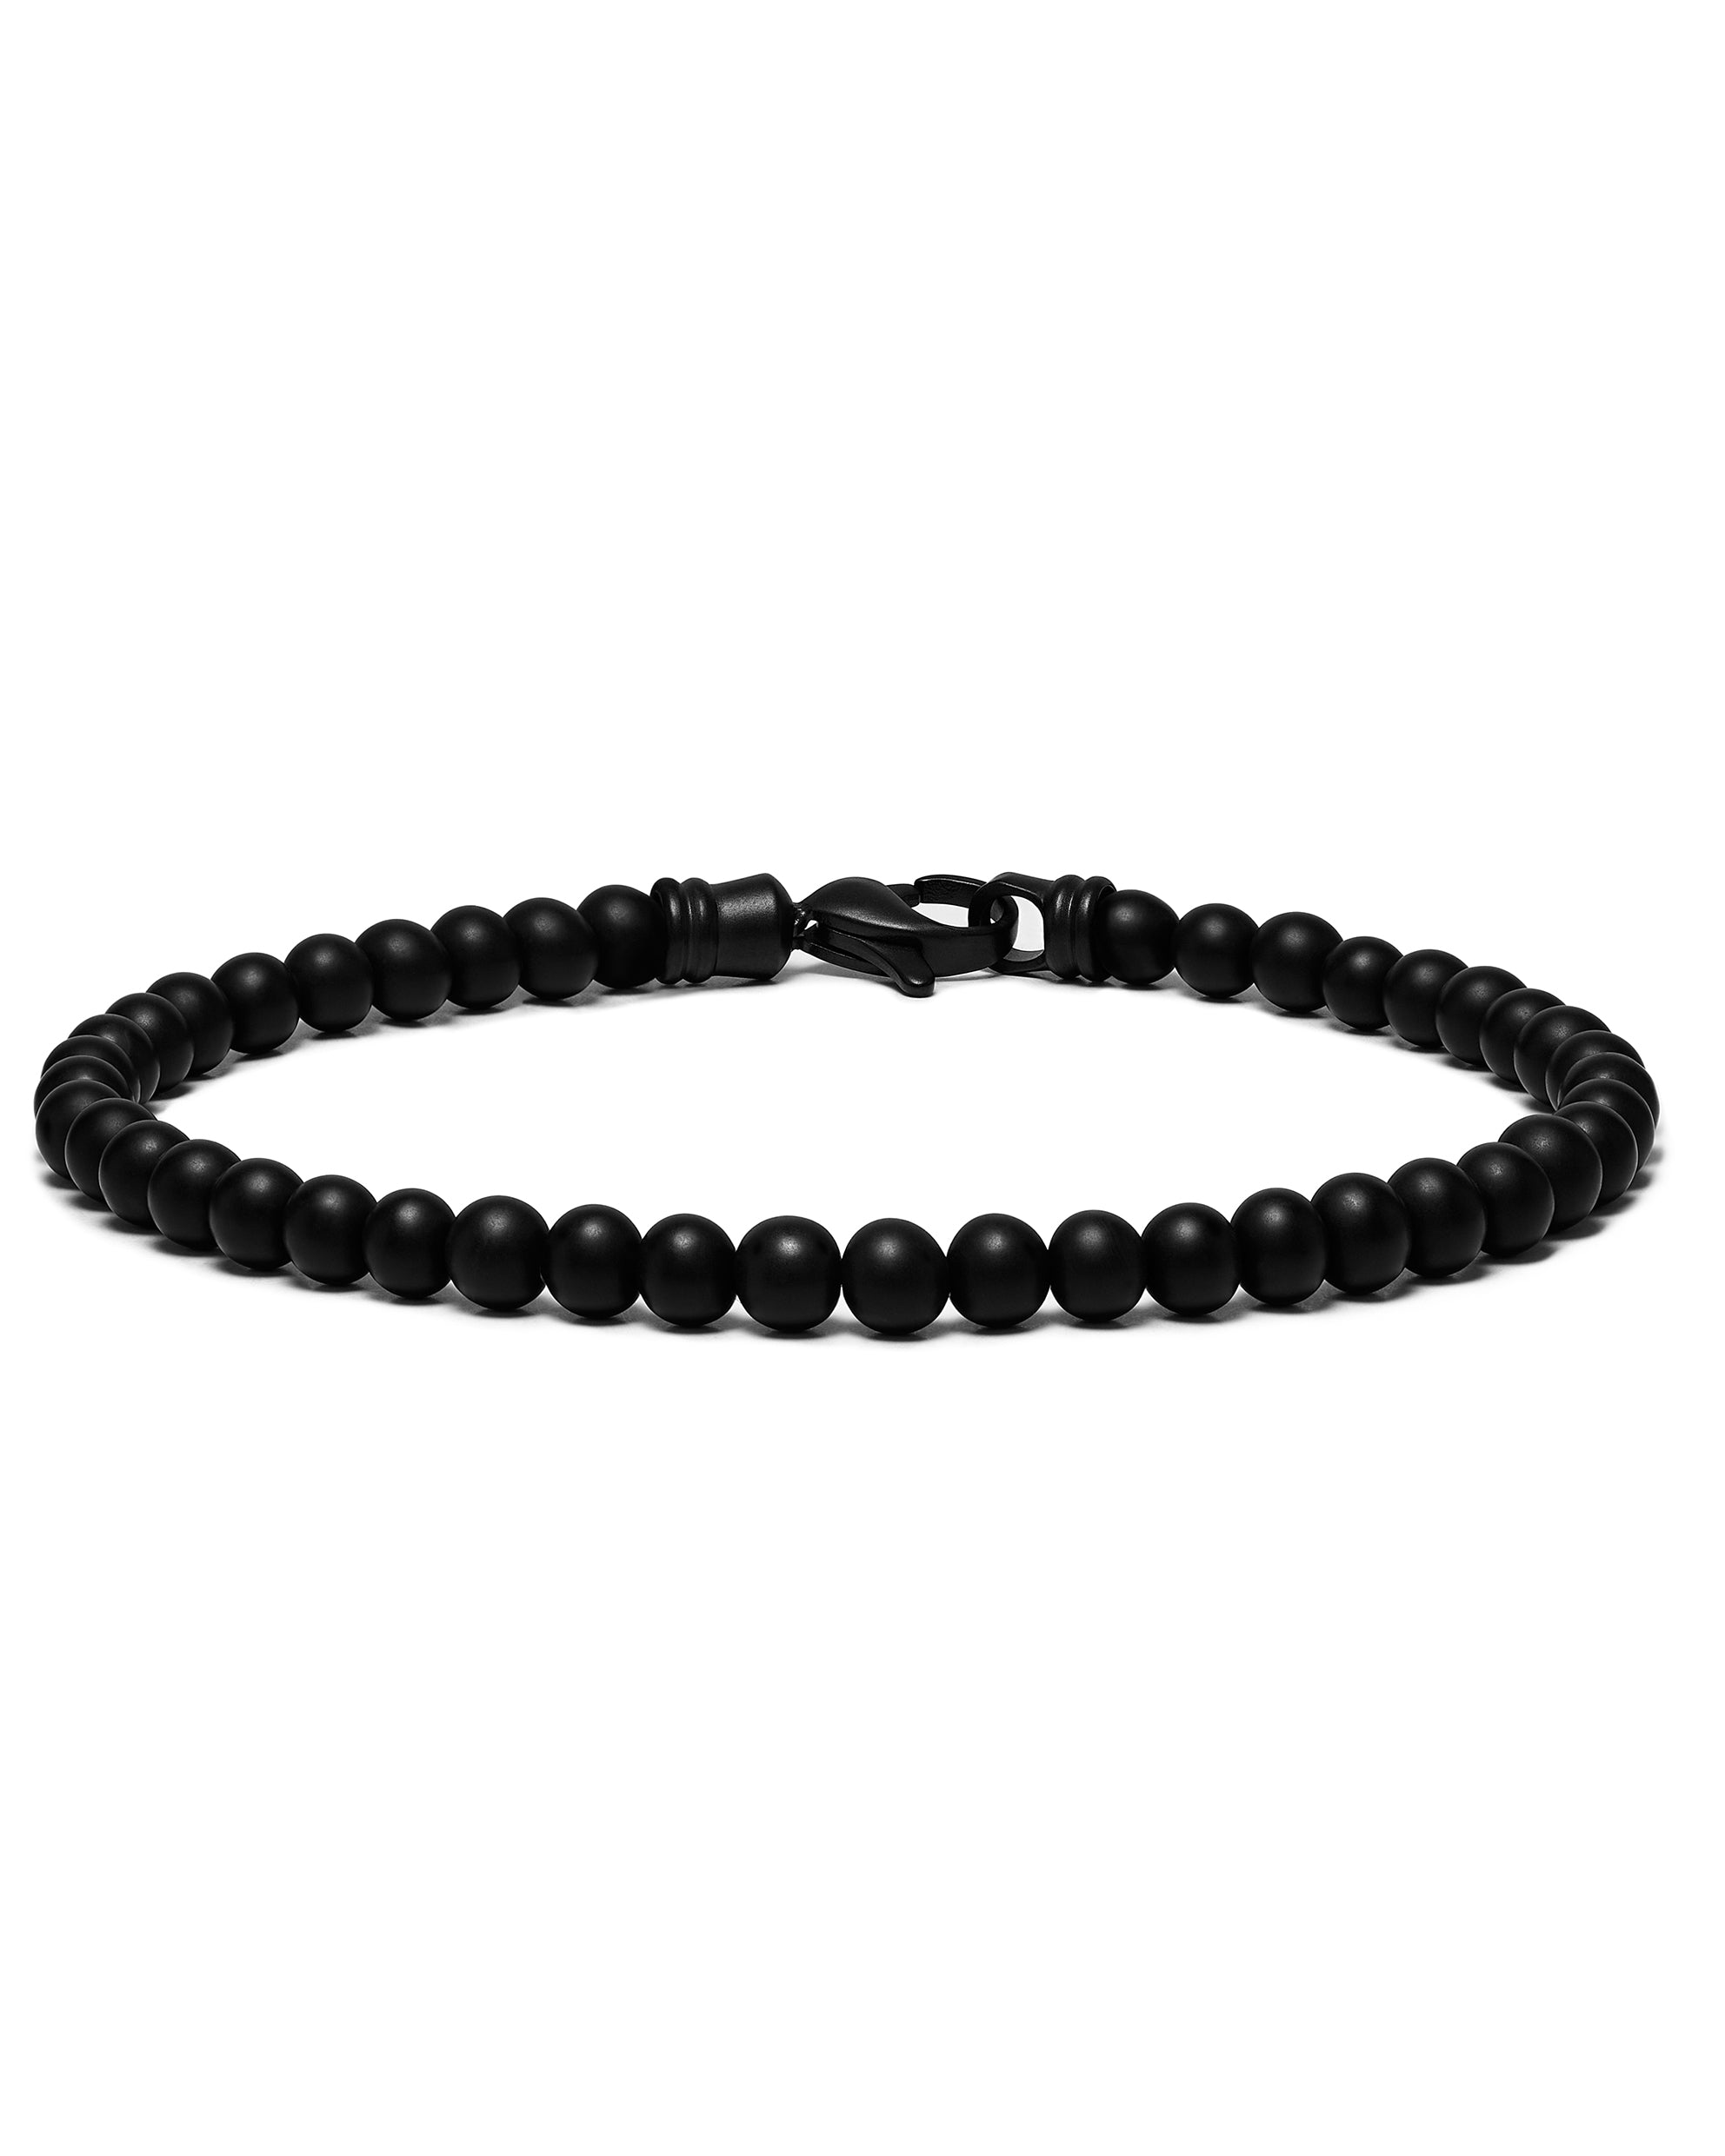 Vincero Chunky Chain Necklace Bracelet Set Oversized Textured Links | eBay